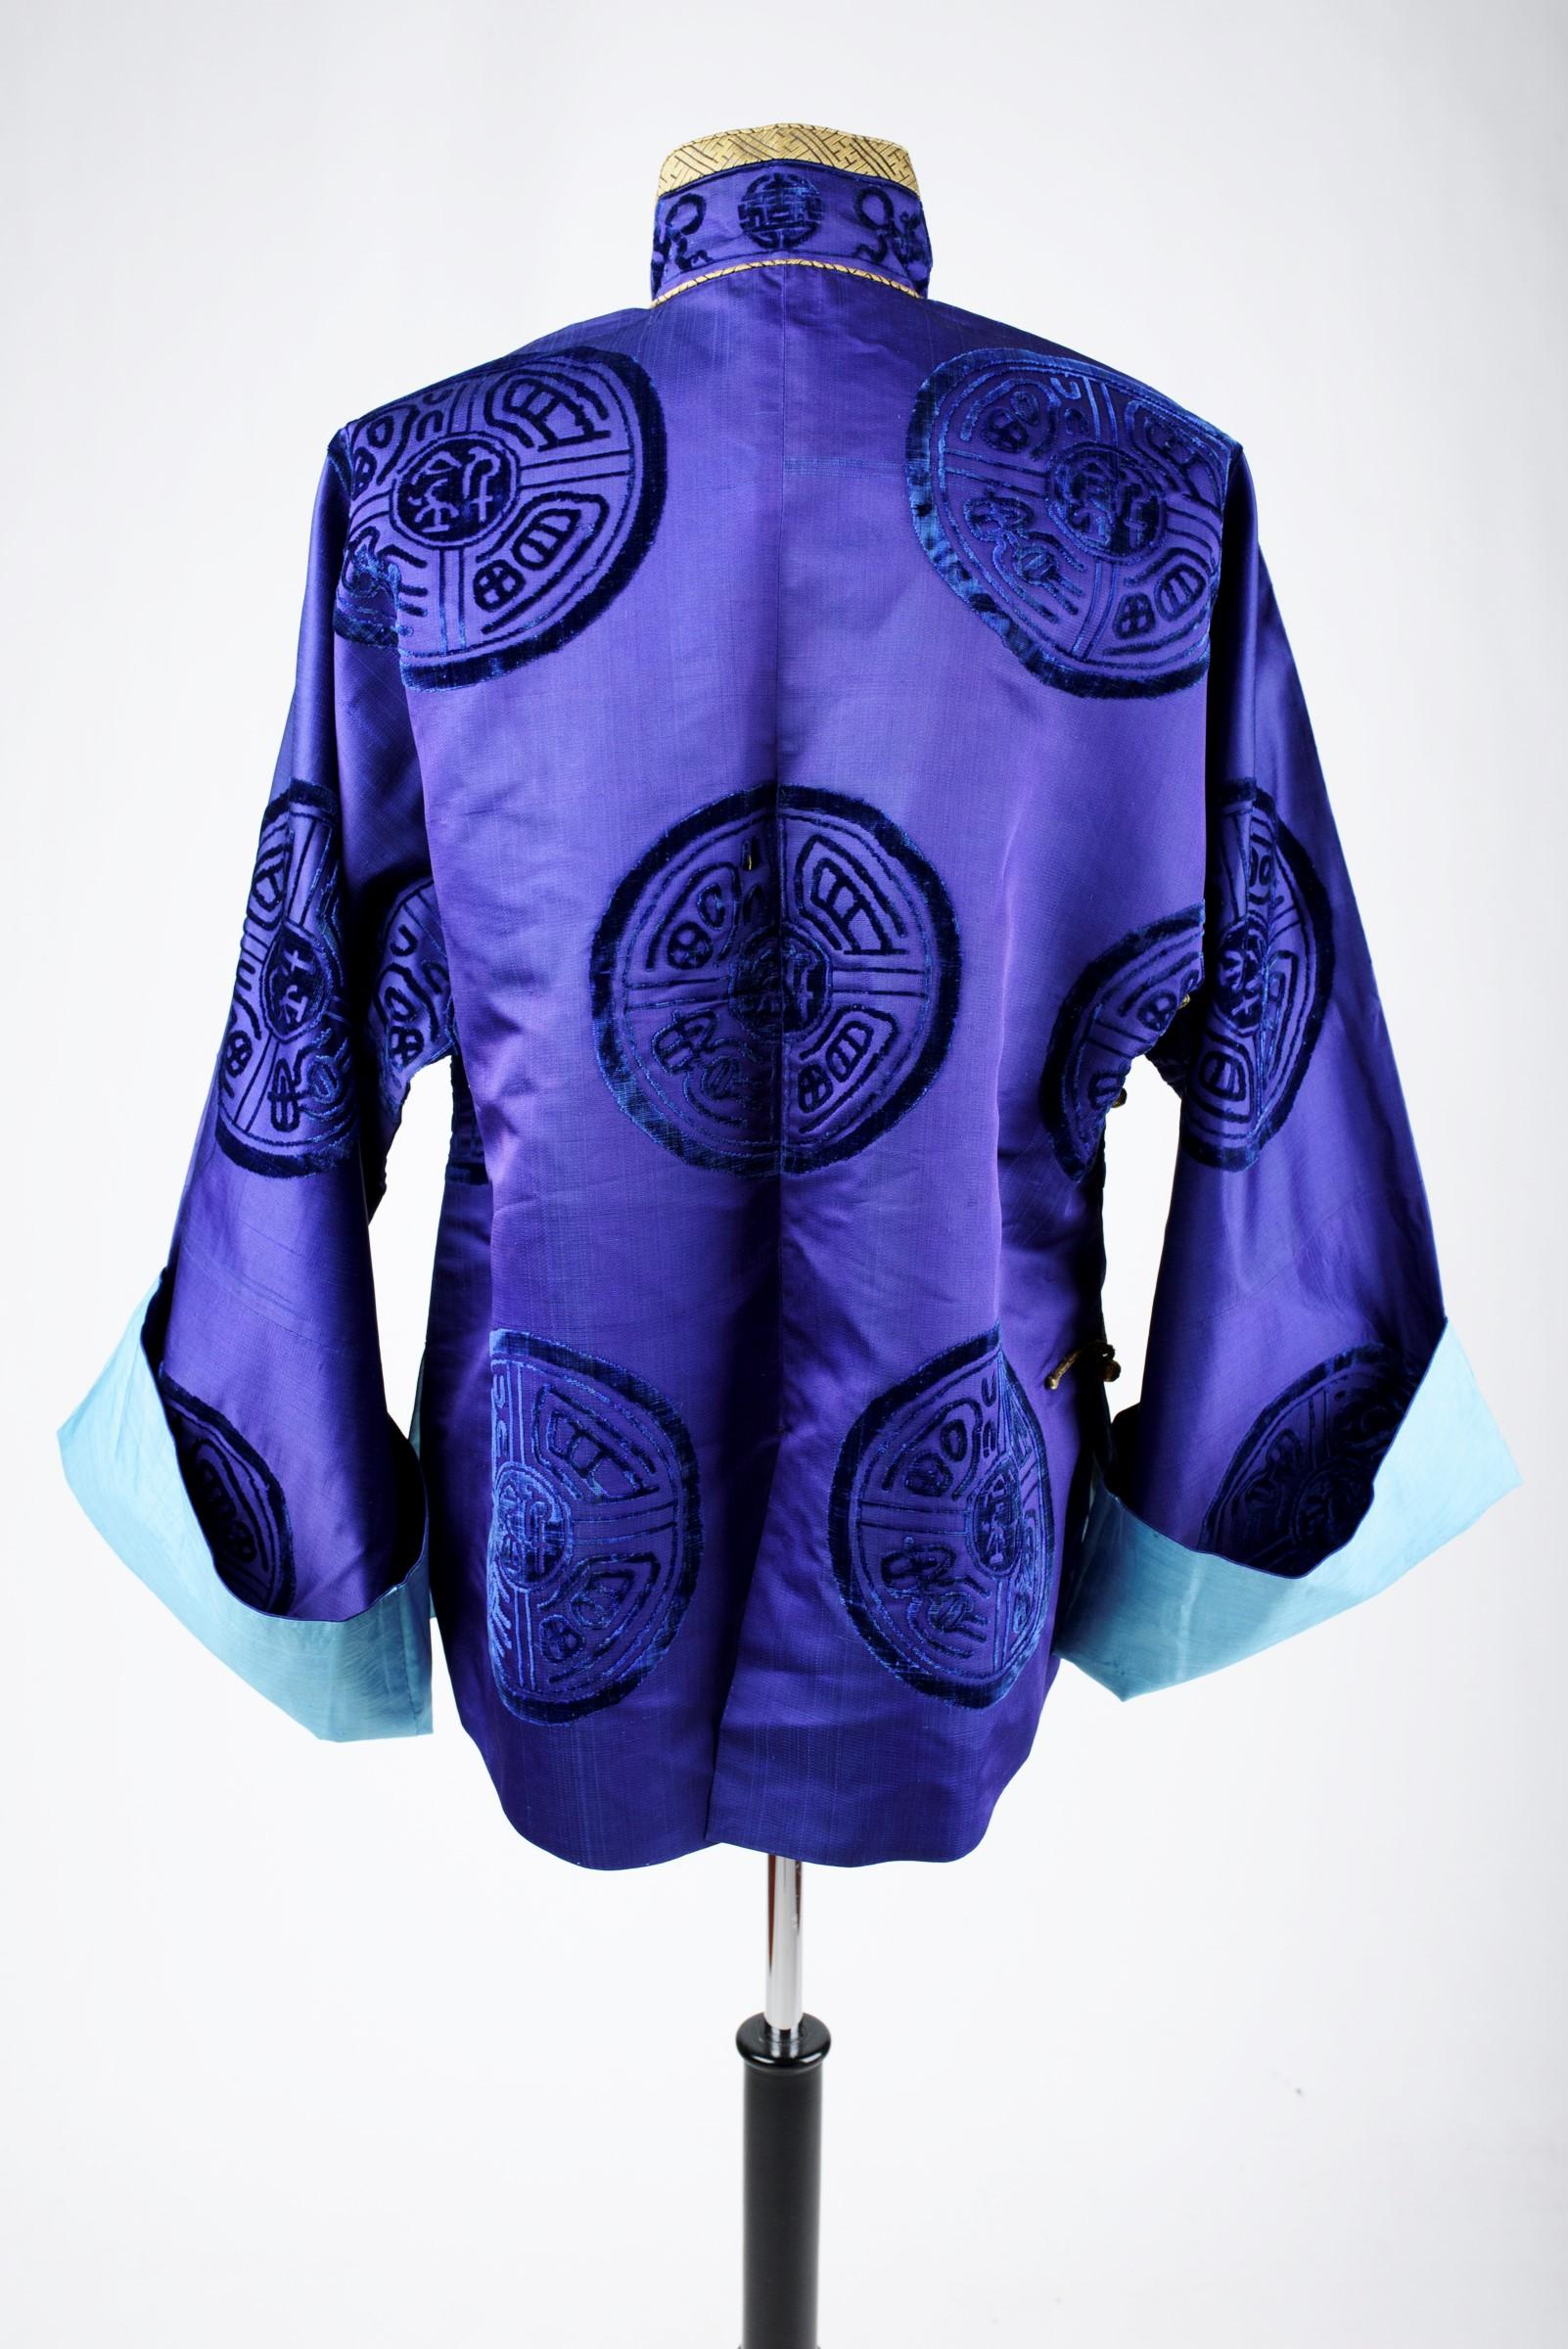 Velvet brocaded satin informal tunic - Soviet Republic of China Circa 1930-1940 2